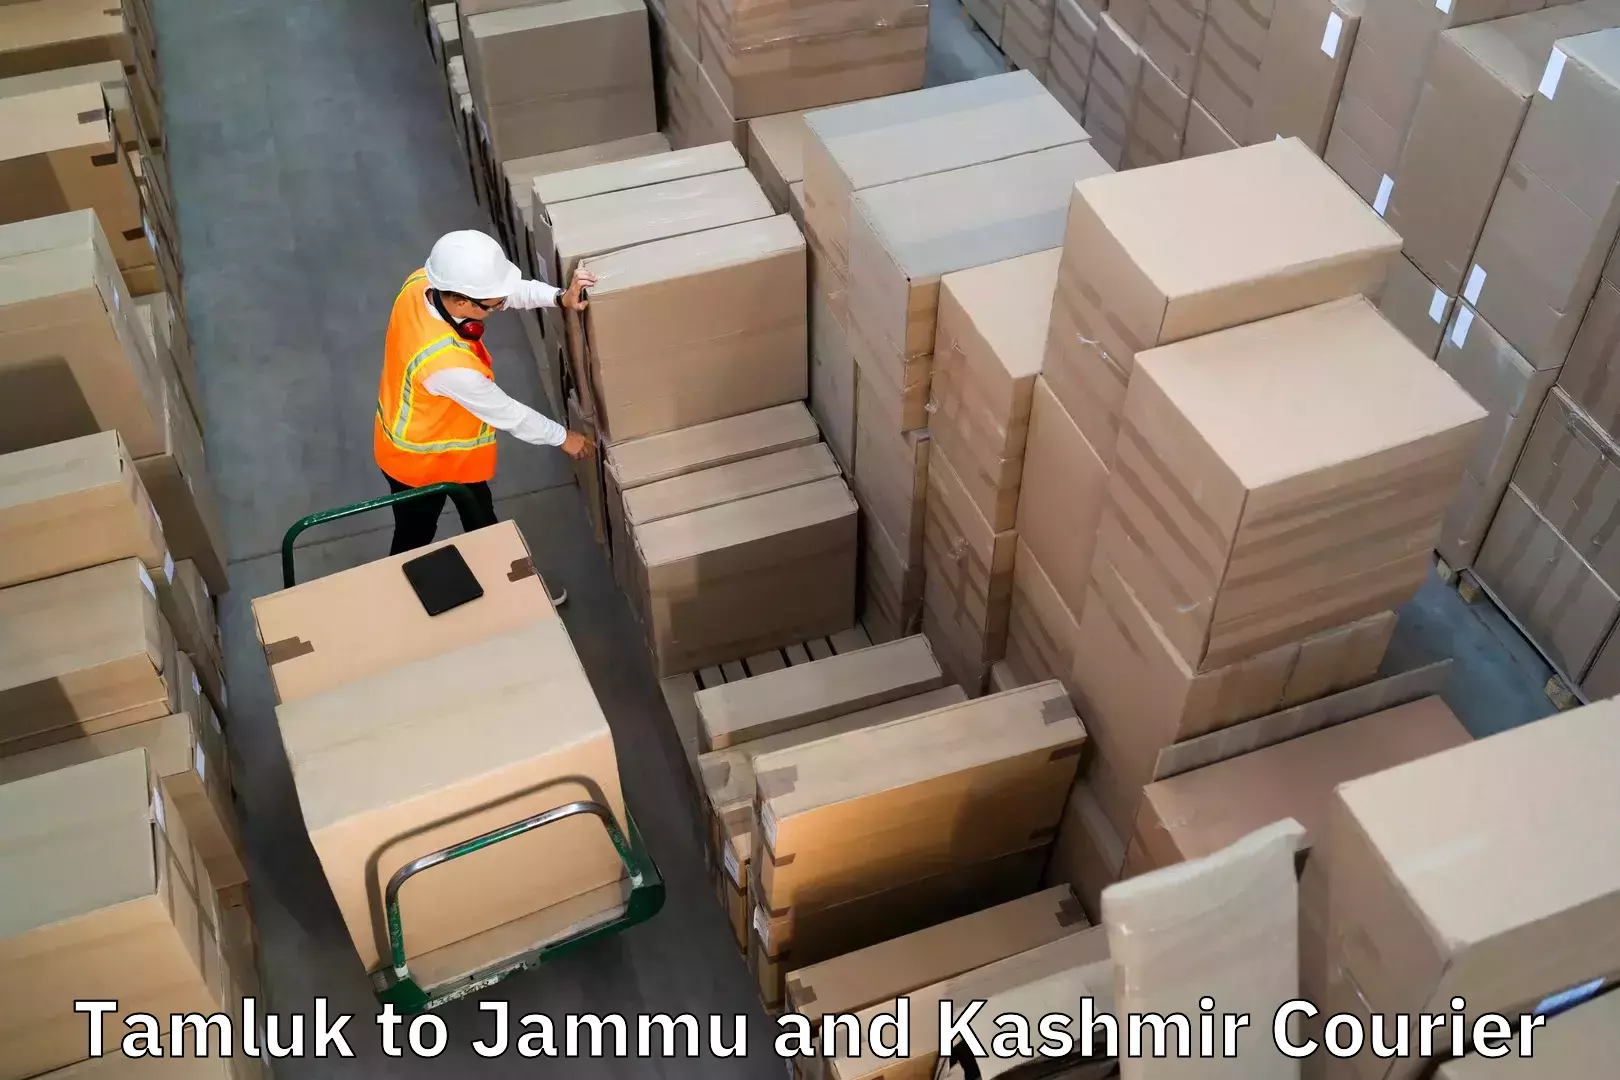 Luggage shipment specialists Tamluk to Pulwama